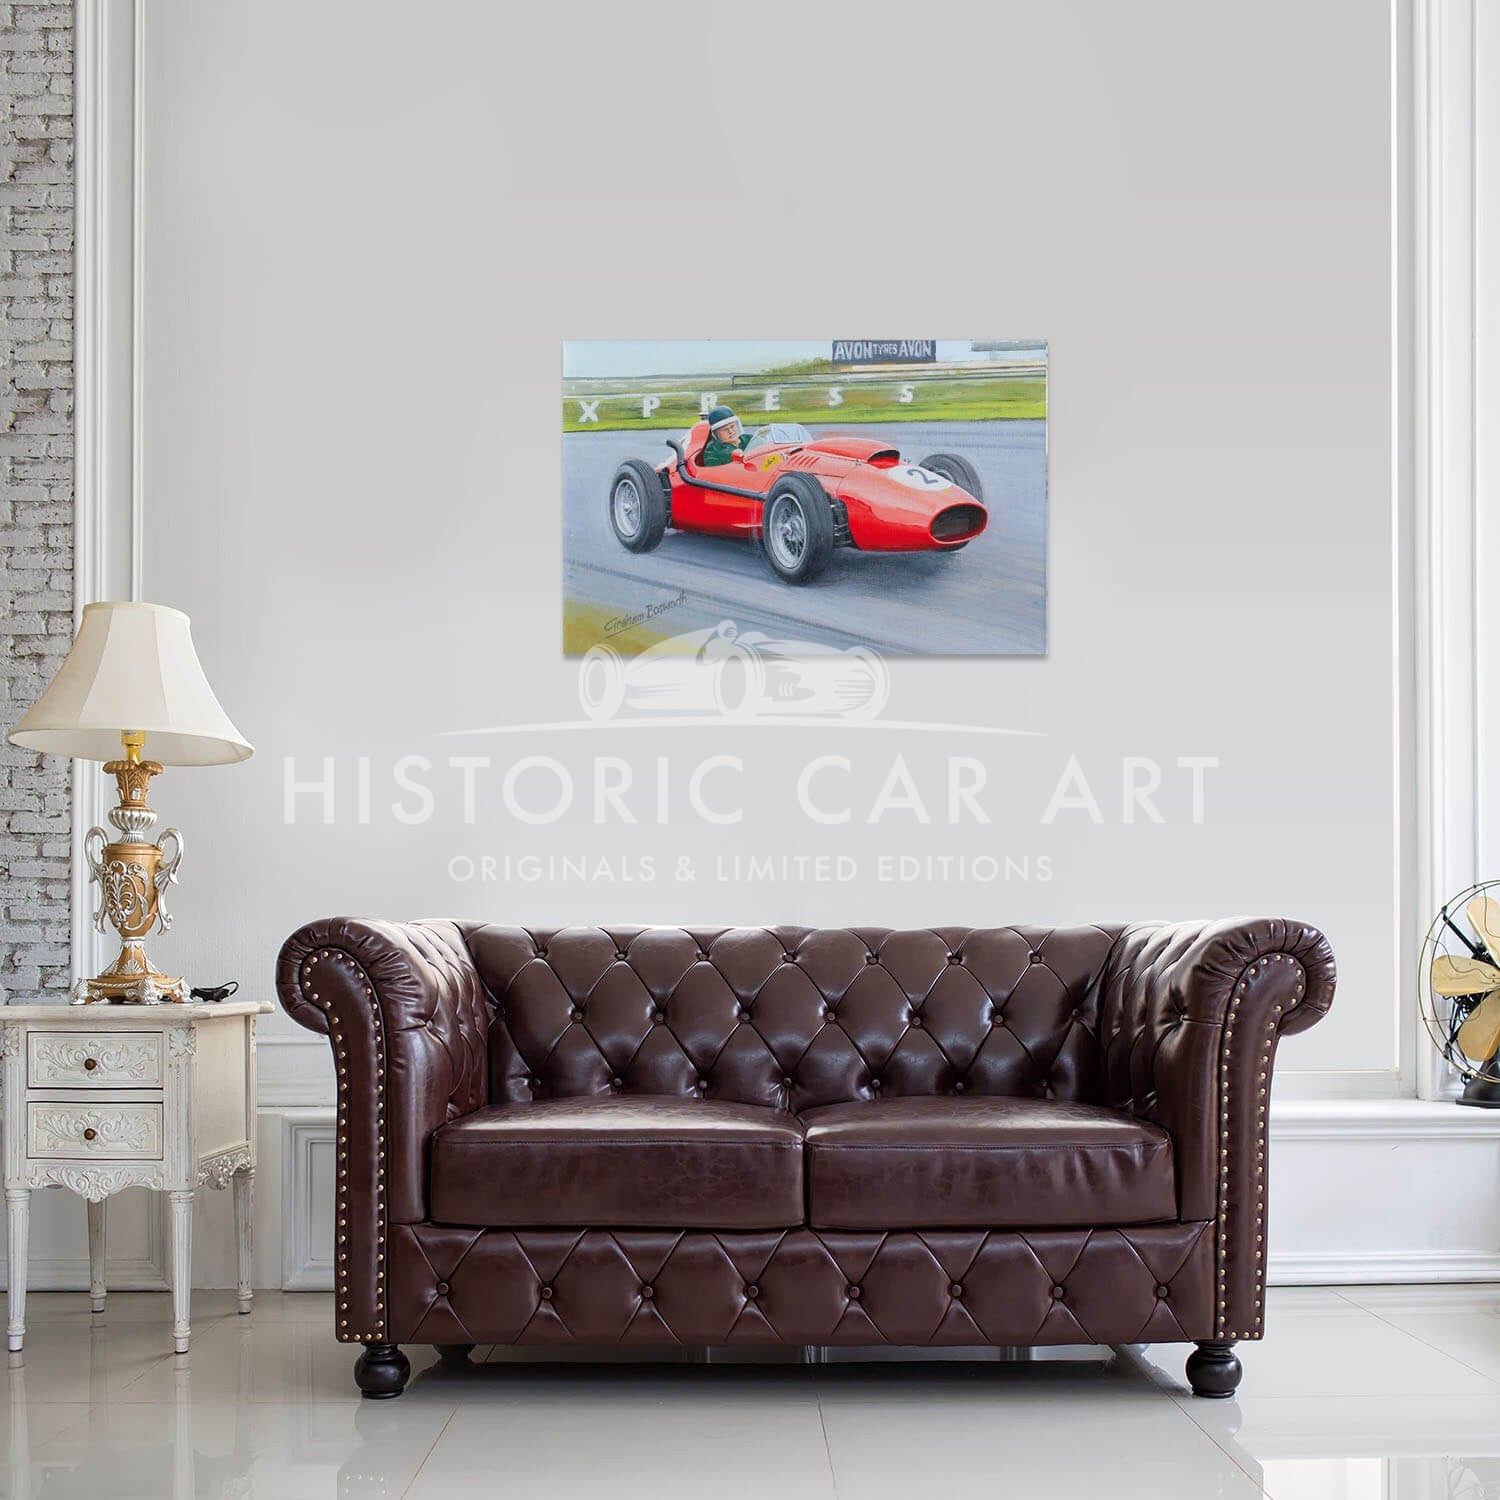 Masters at Work | Hawthorn and Ferrari 246 Dino | Art Print